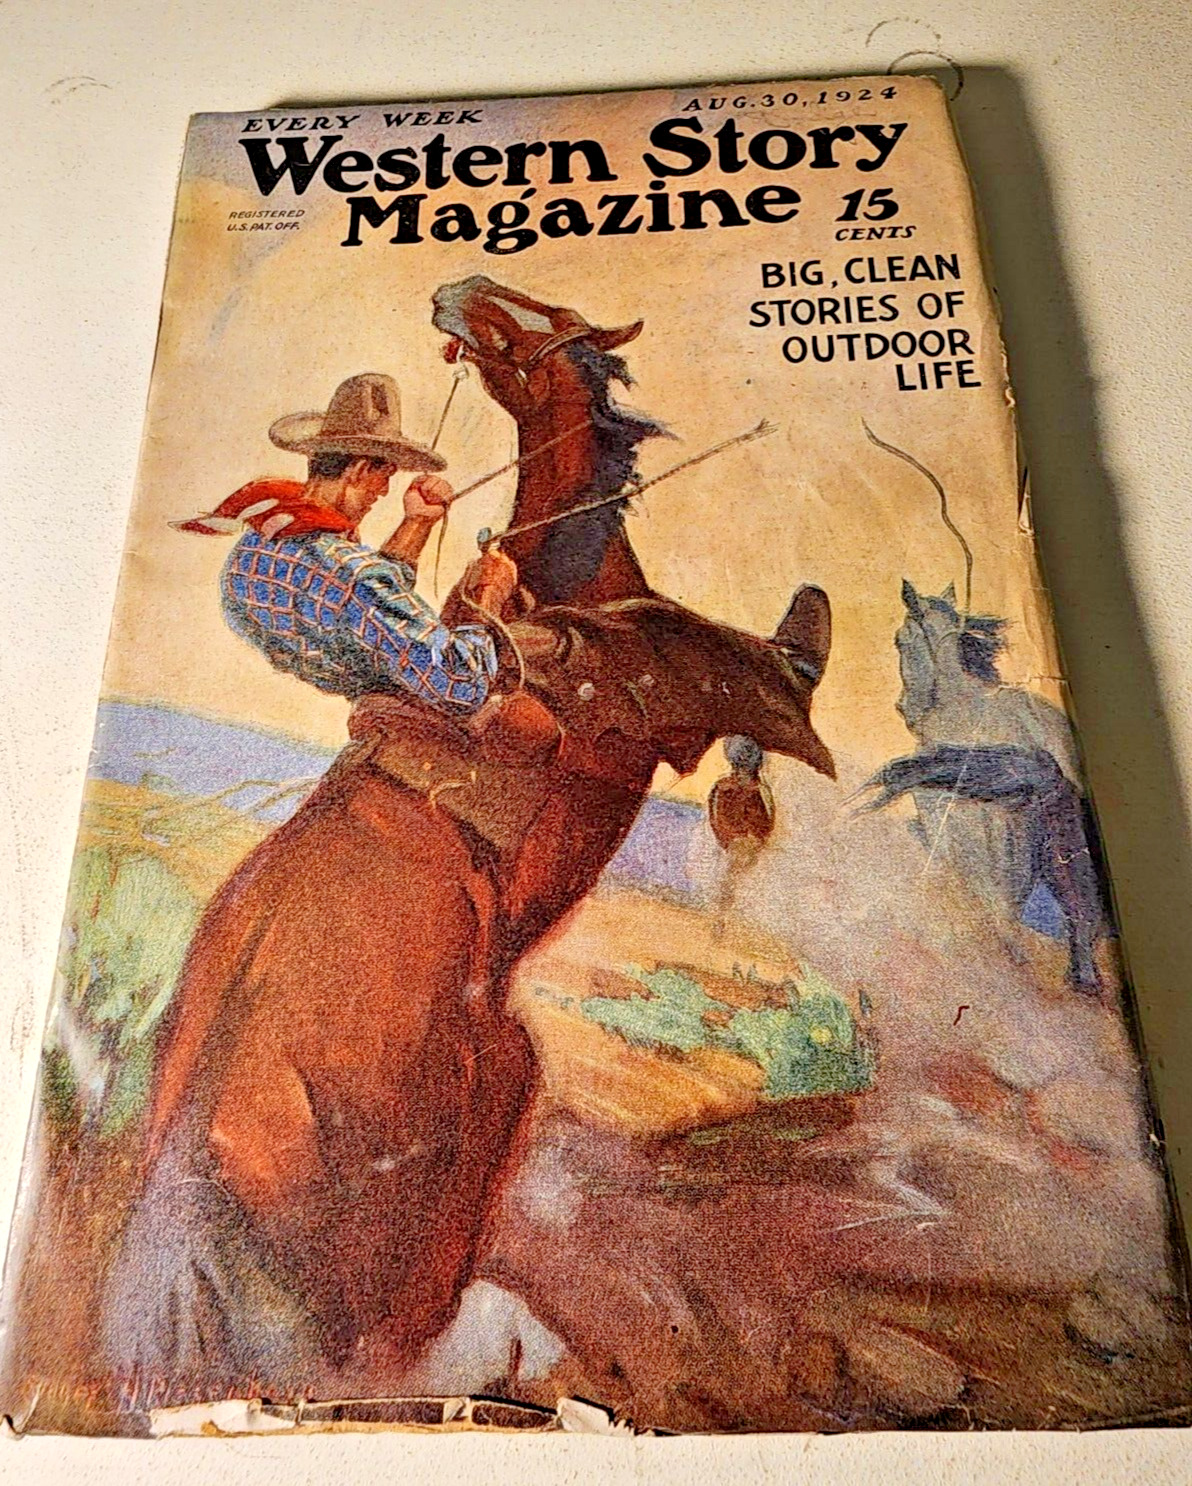 Western Stories August 30, 1924